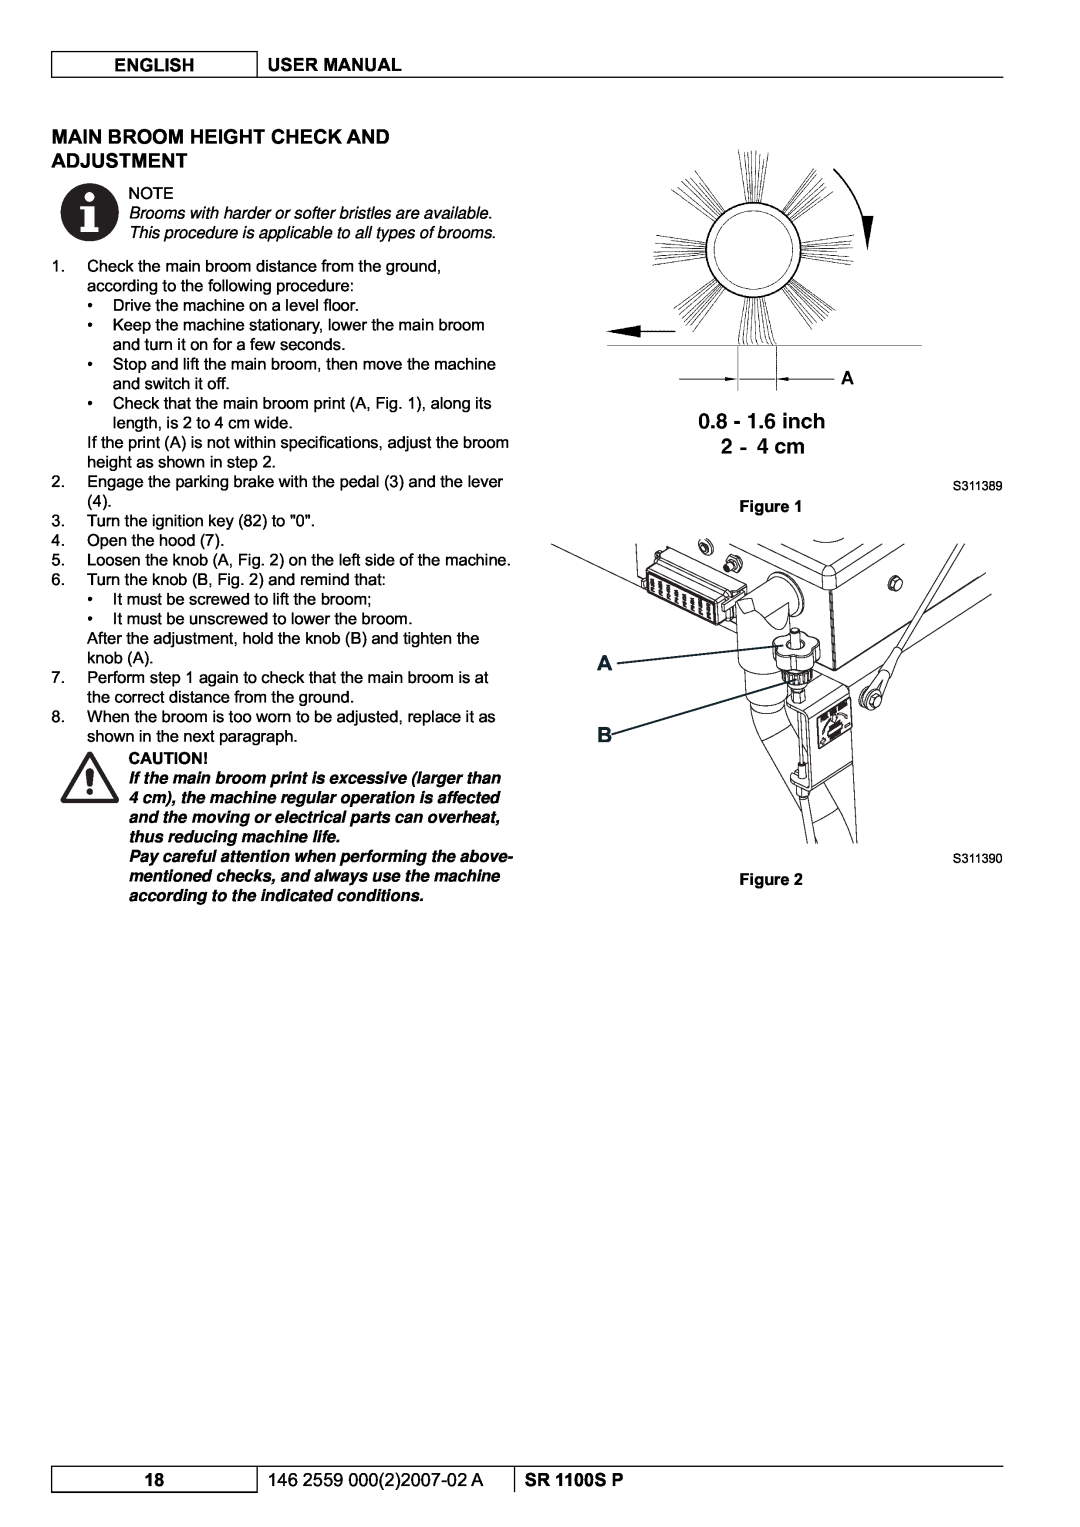 Nilfisk-Advance America SR 1100S Main Broom Height Check And Adjustment, English, User Manual, 146 2559 00022007-02A 